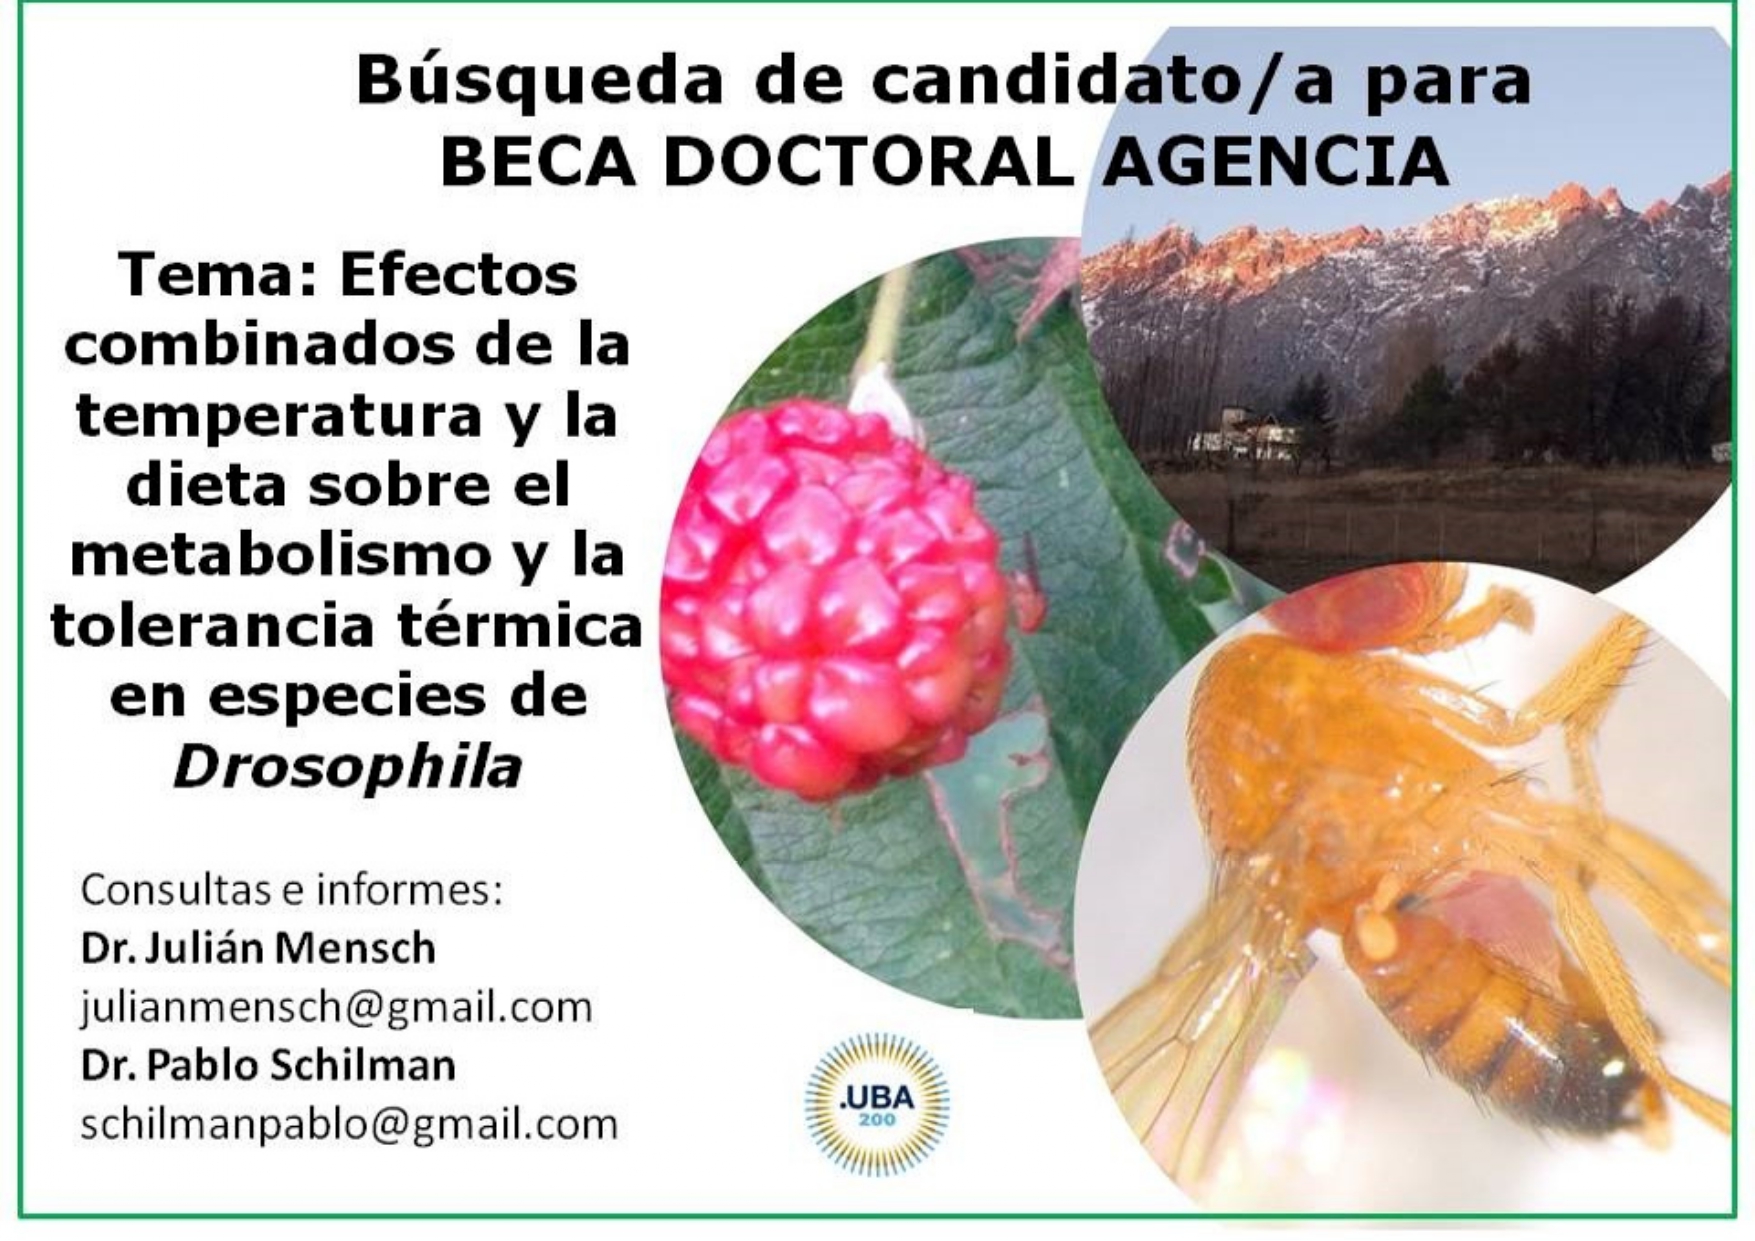 Beca Doctoral Agencia_page-0001